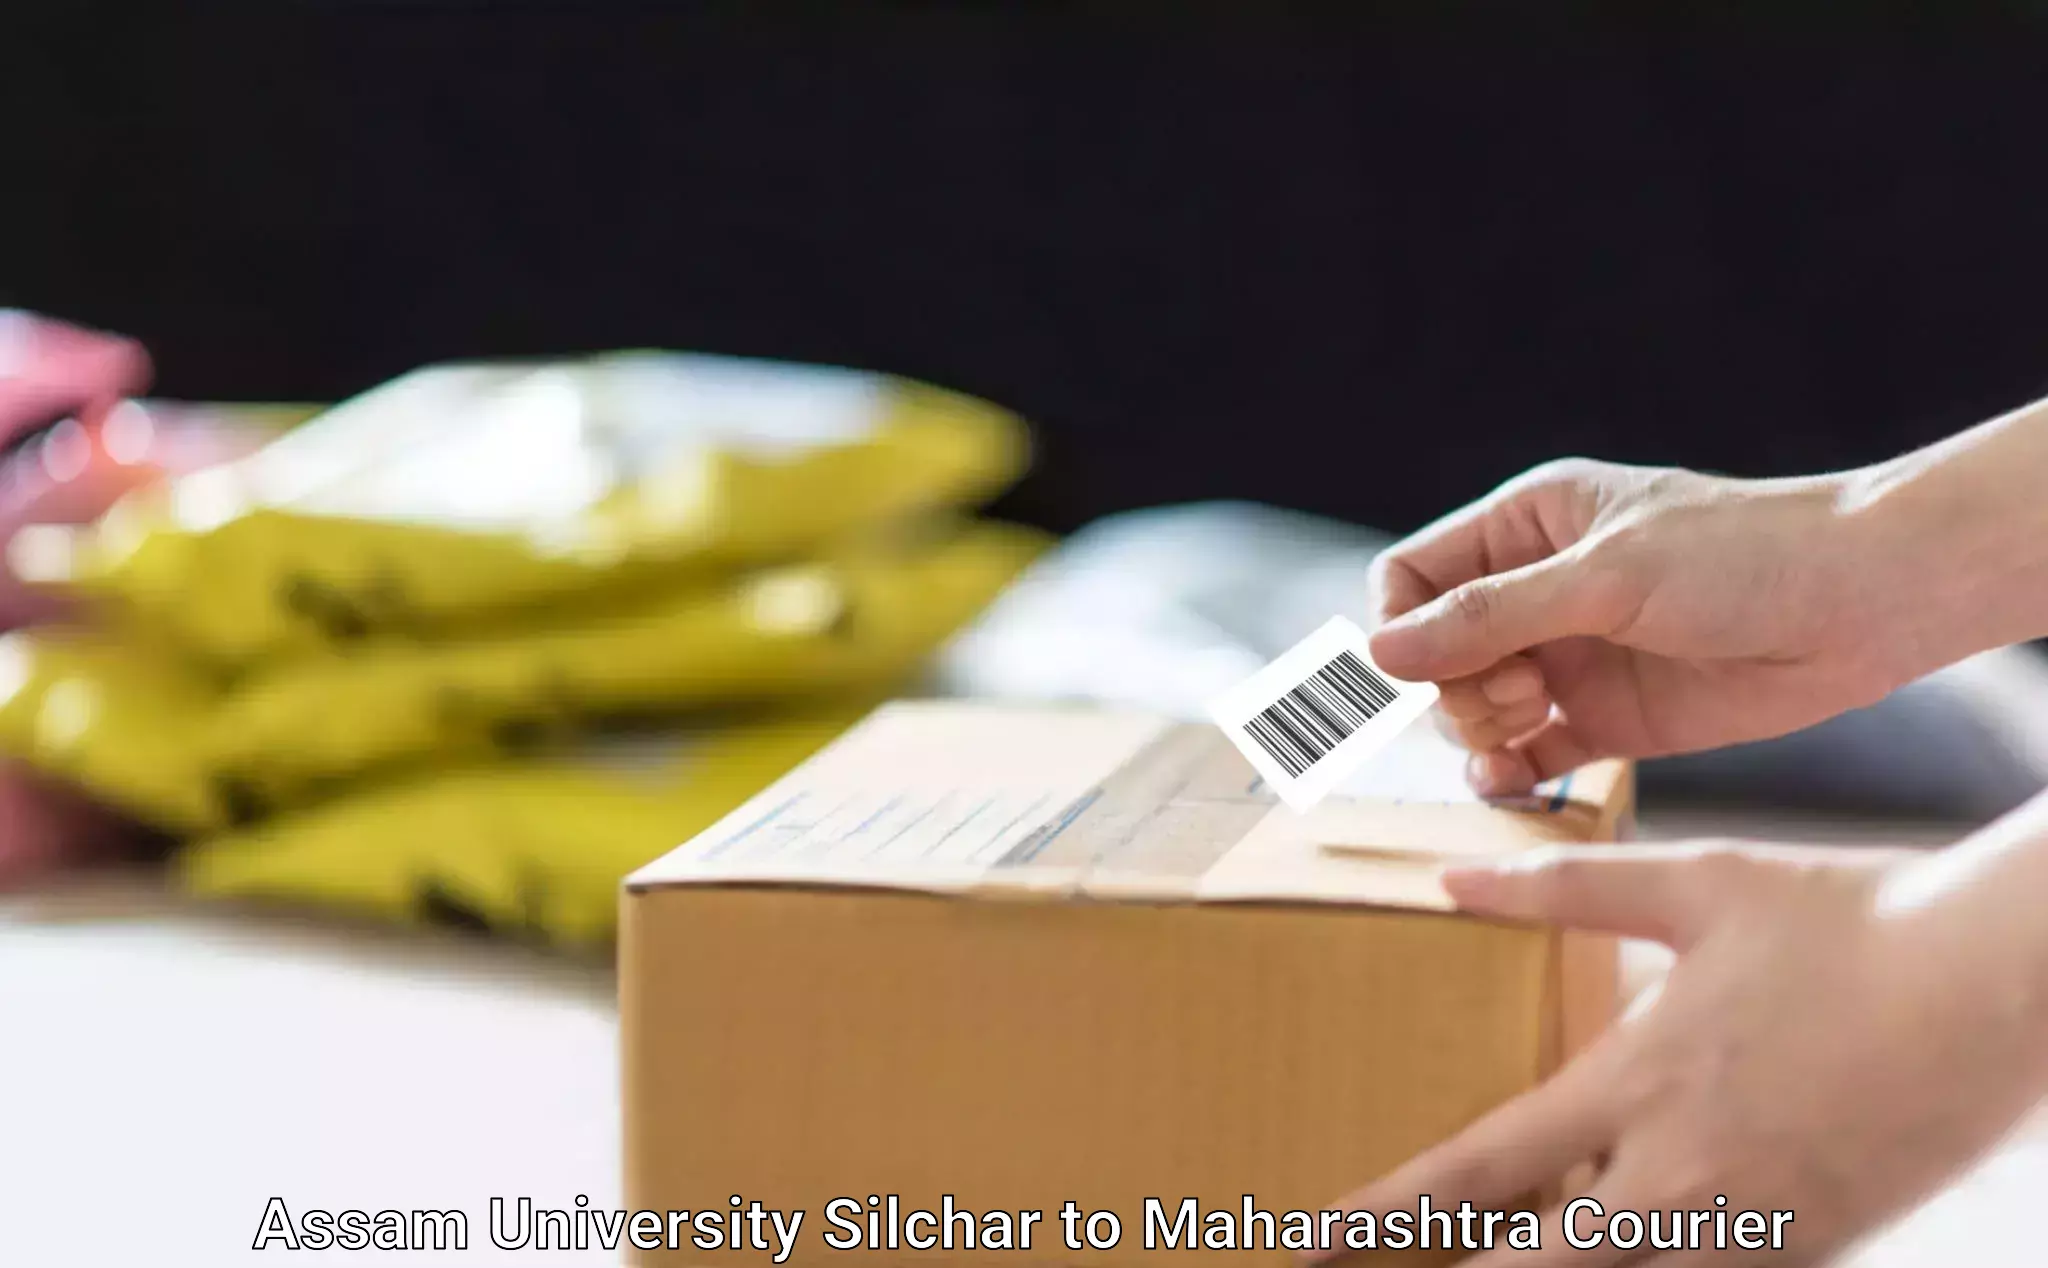 Modern delivery methods in Assam University Silchar to Maharashtra